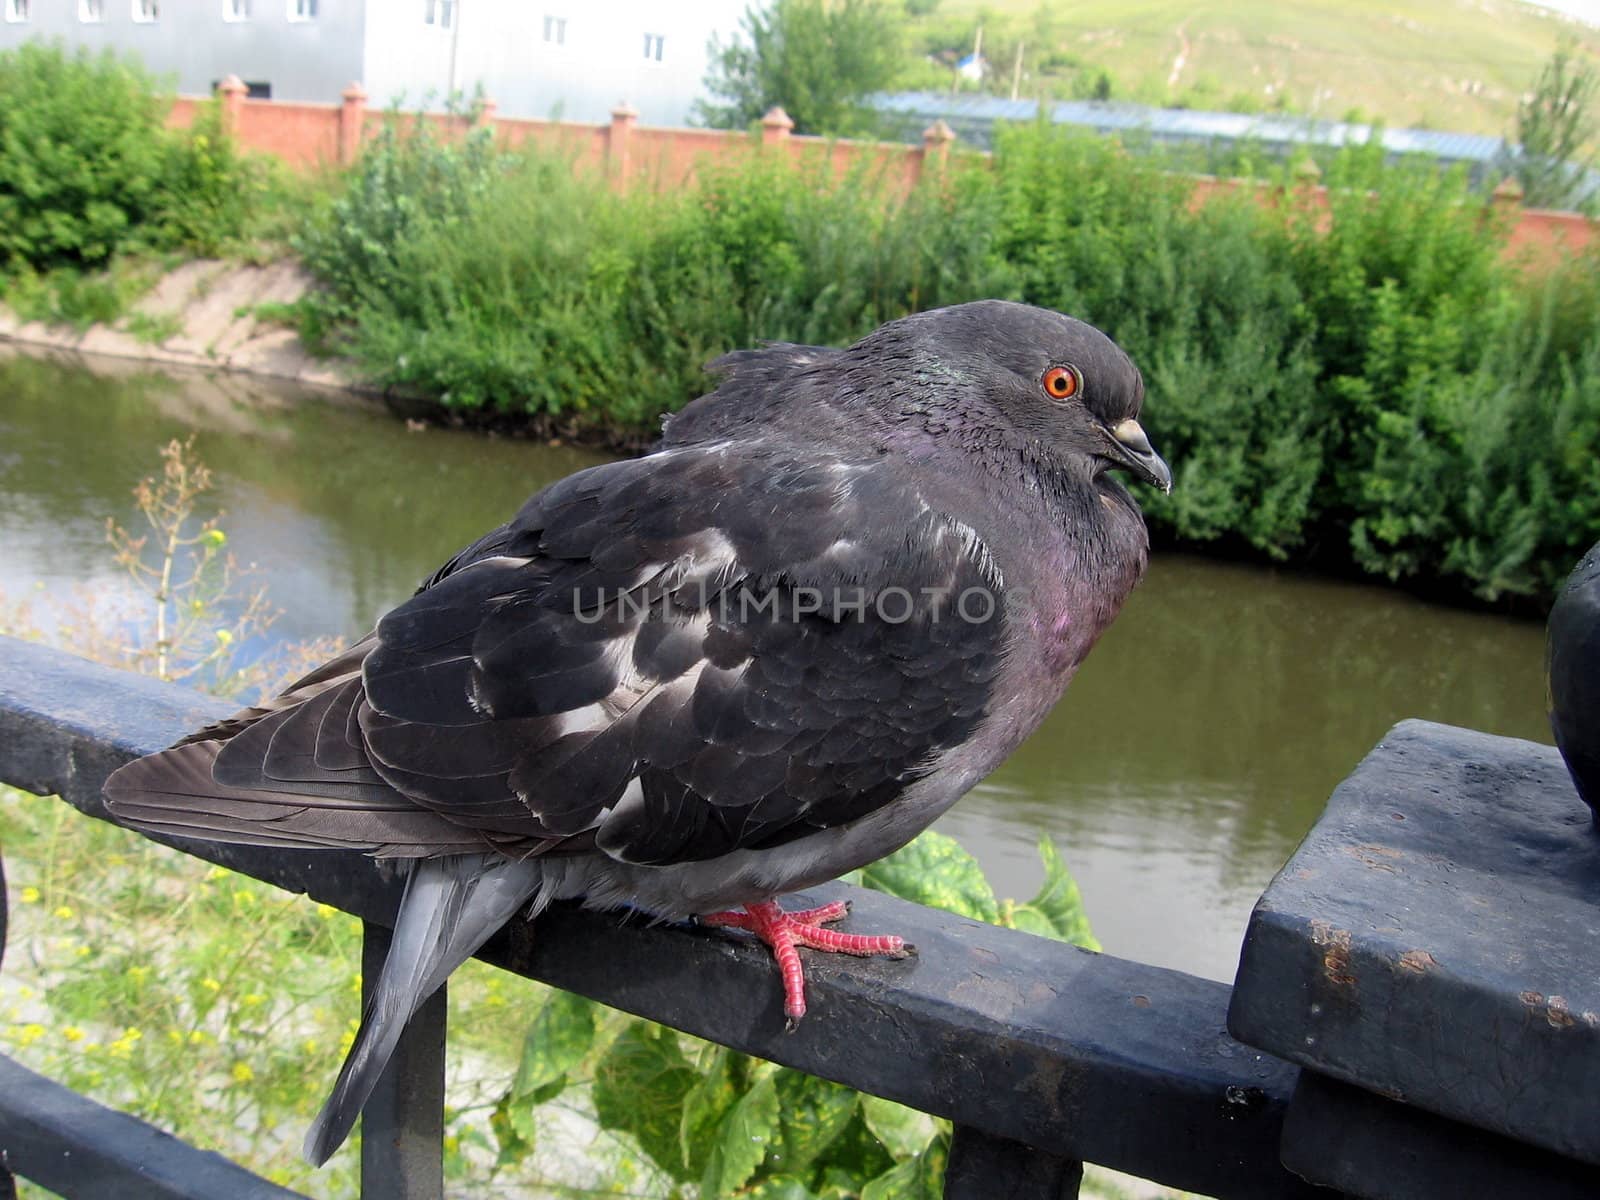 Cute pigeon sits near water, summer shot